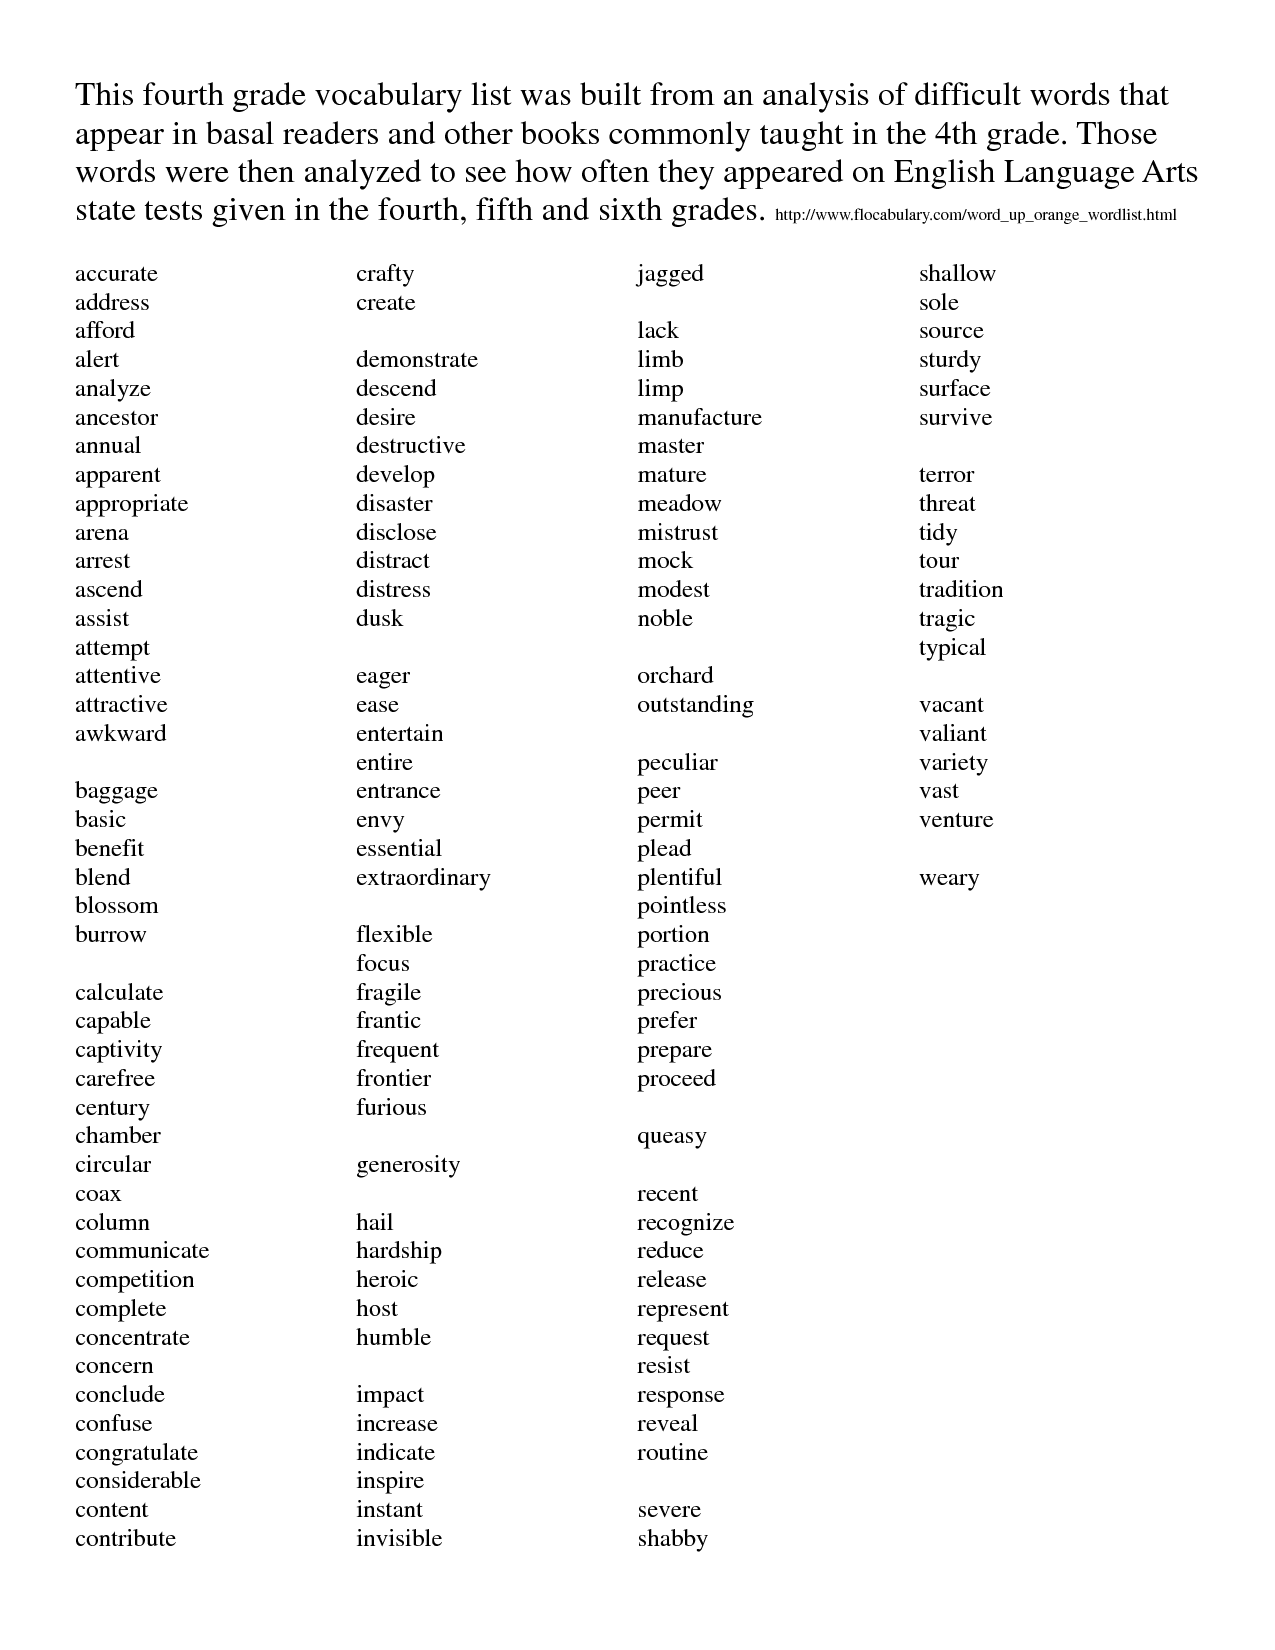 4th Grade Vocabulary Word List Image